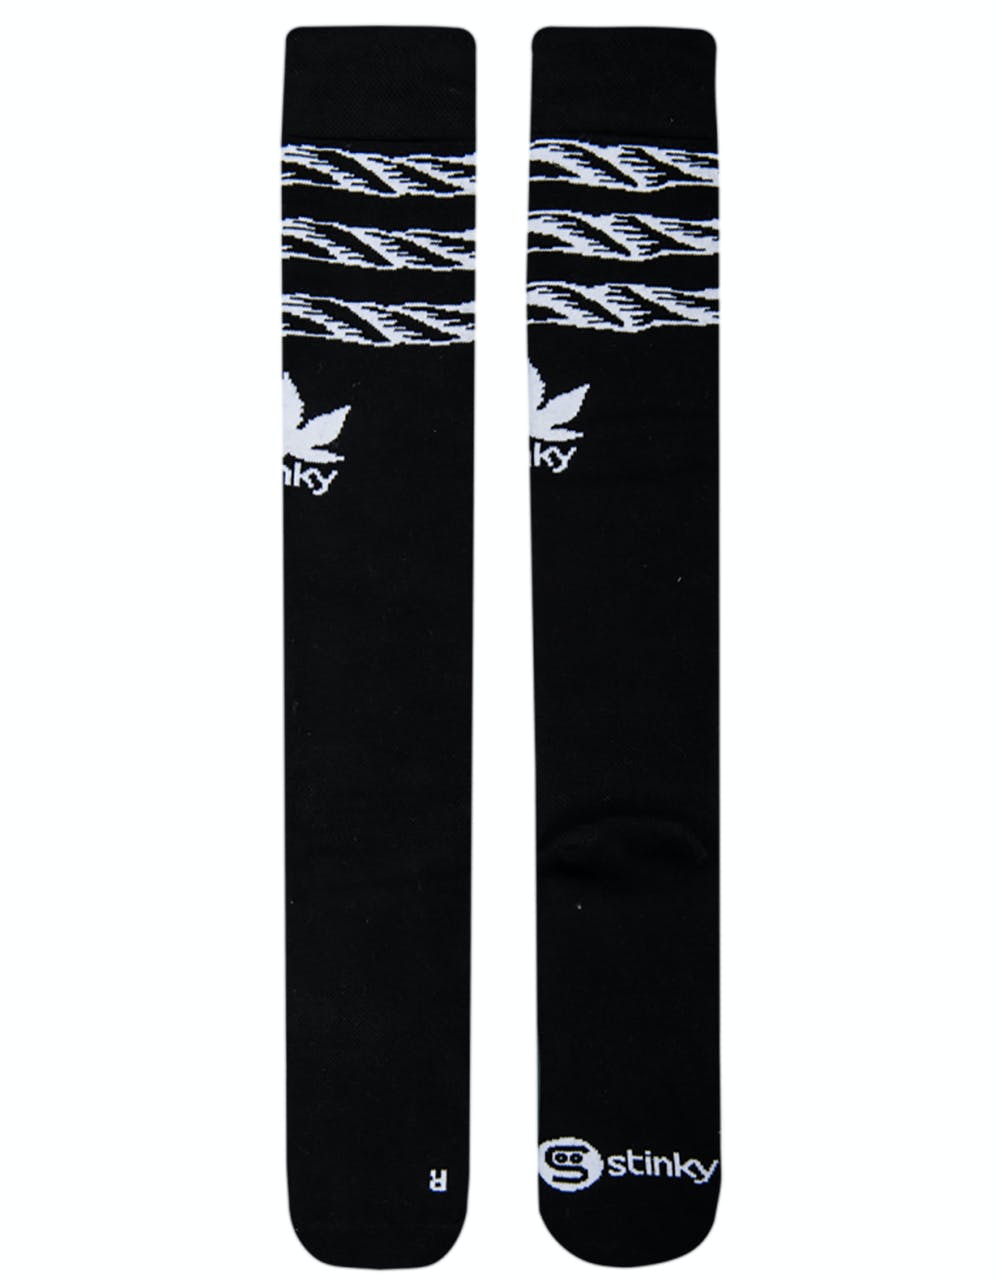 Stinky Olympic Medalist Snowboard Socks - Black